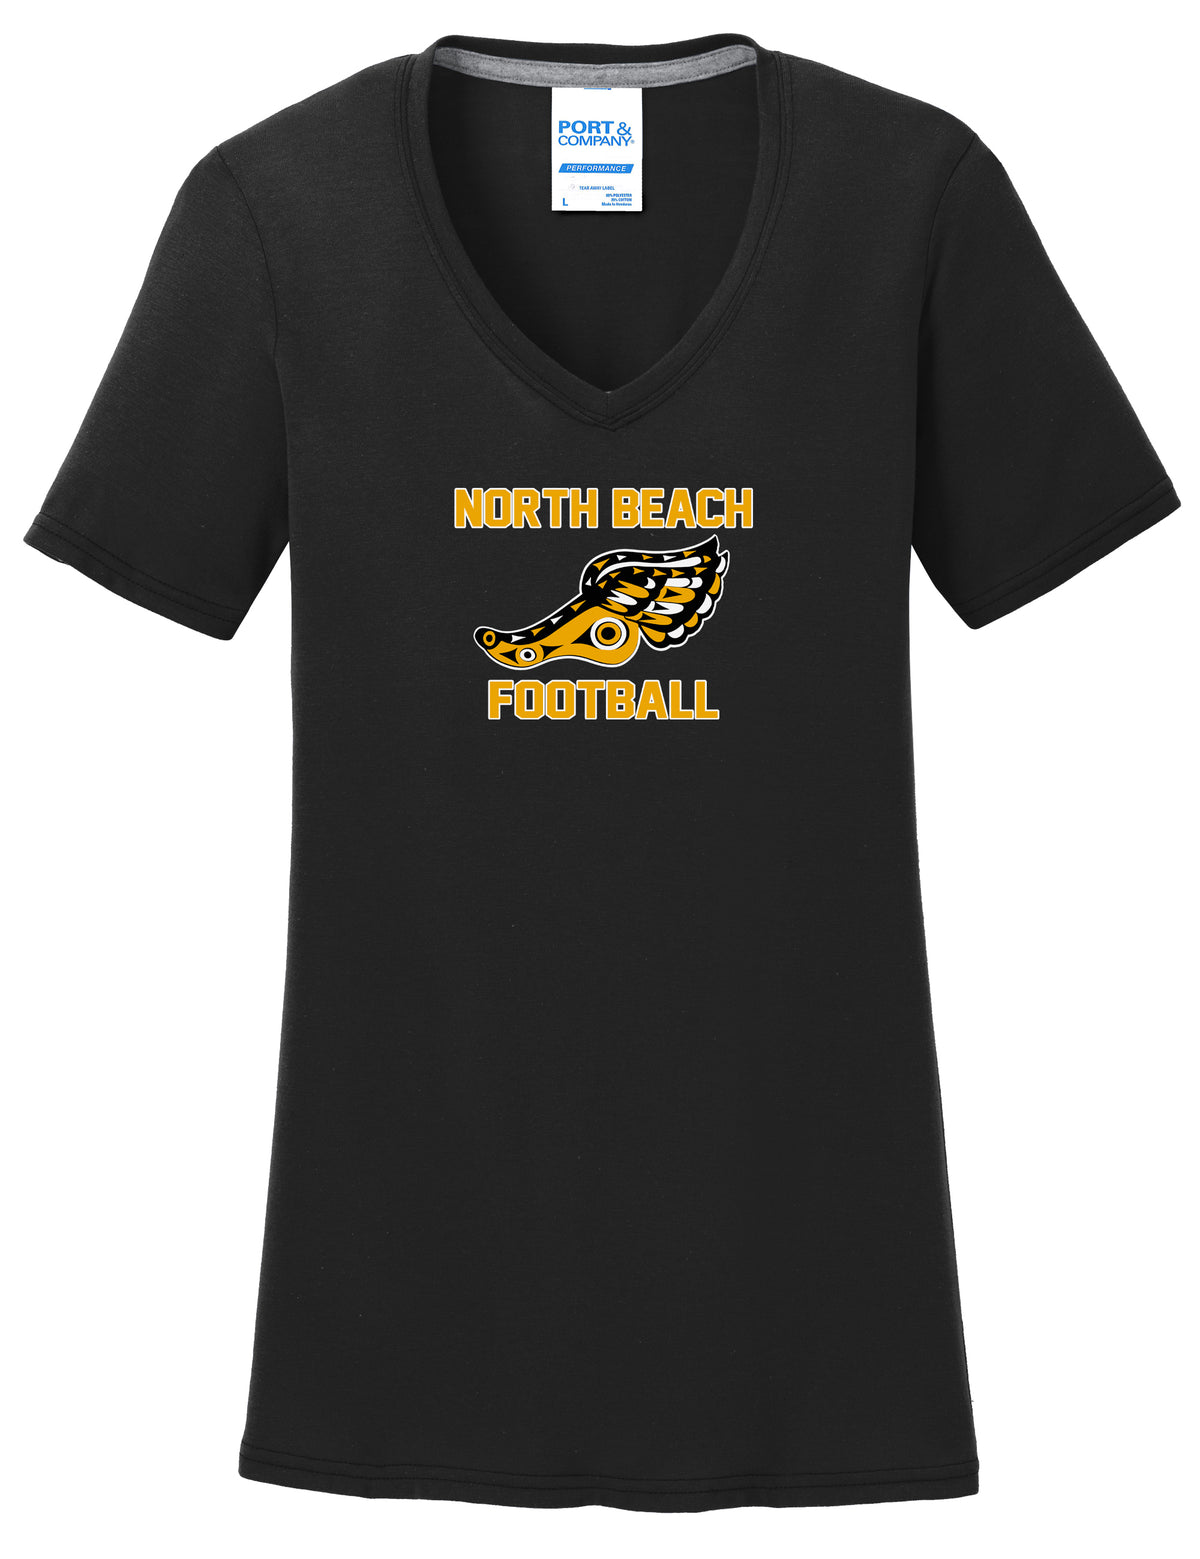 North Beach Football Women's T-Shirt